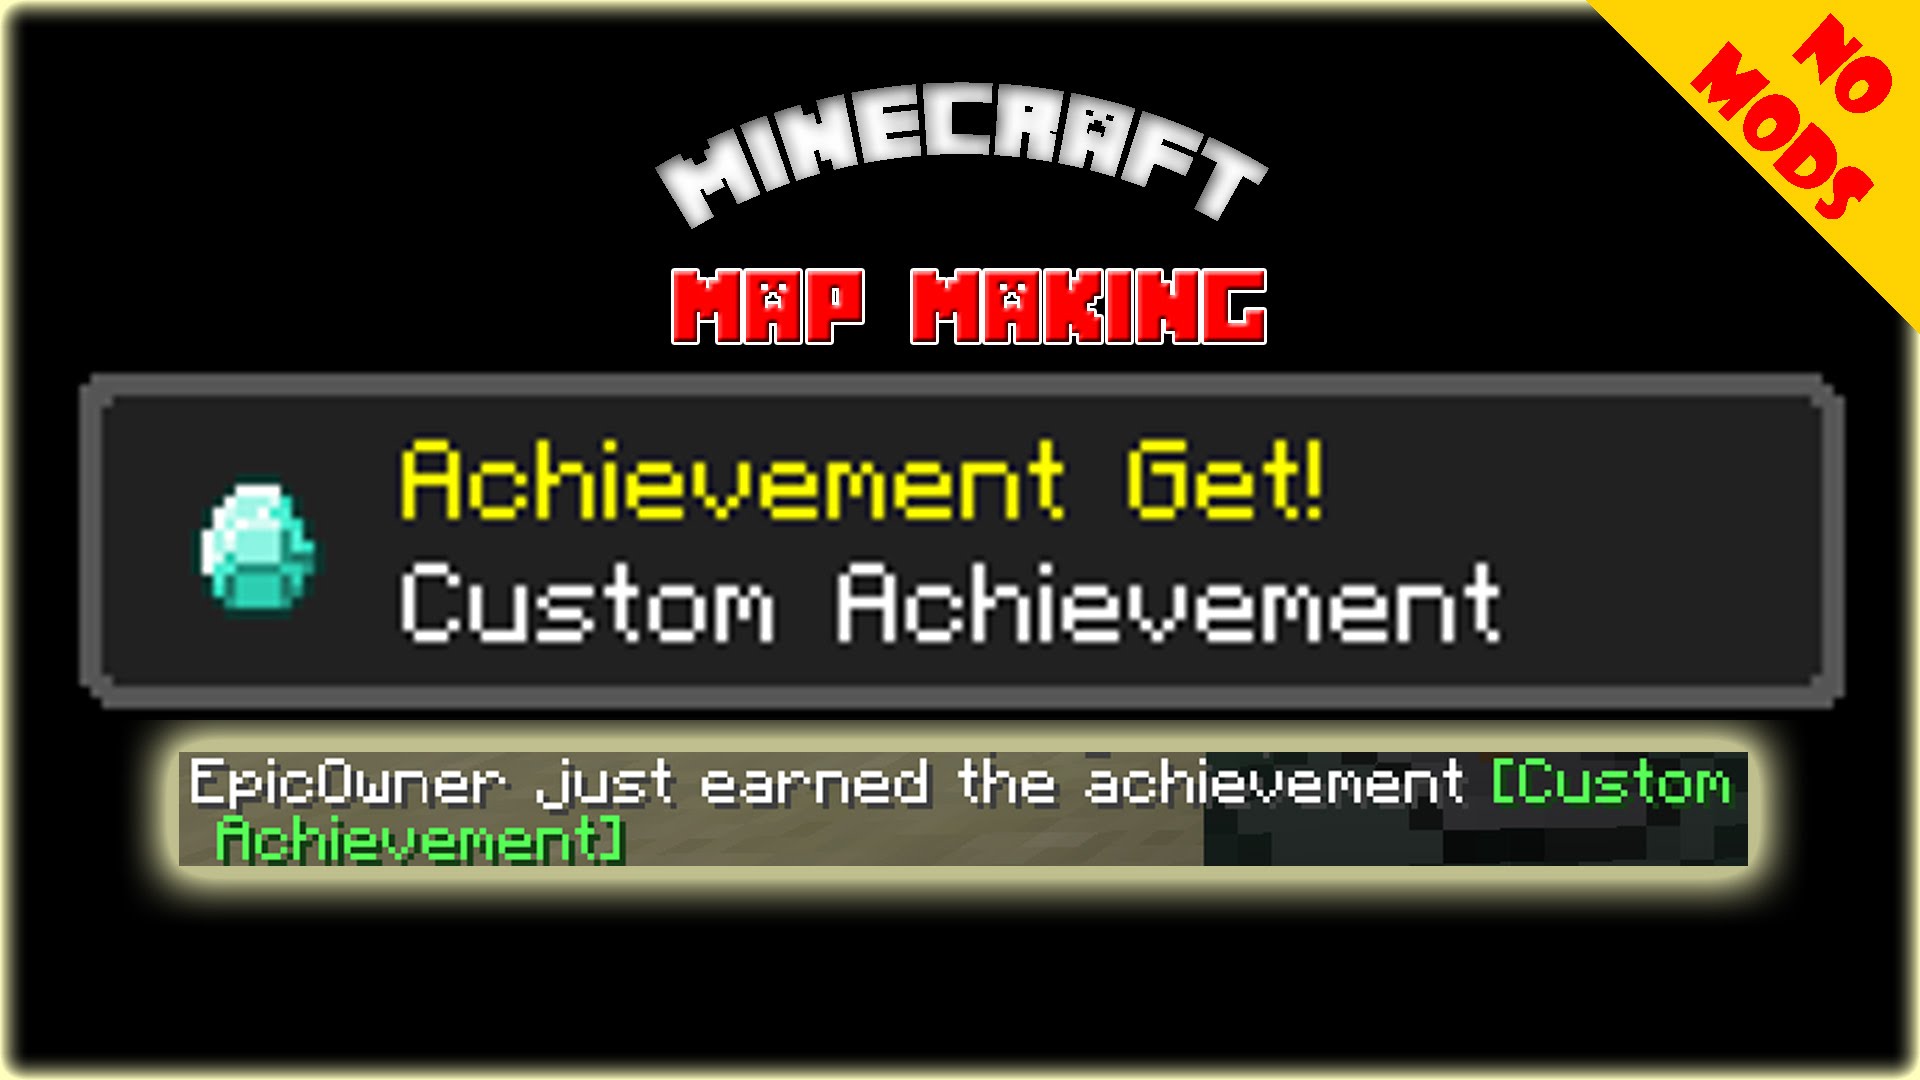 Earned achievement photo